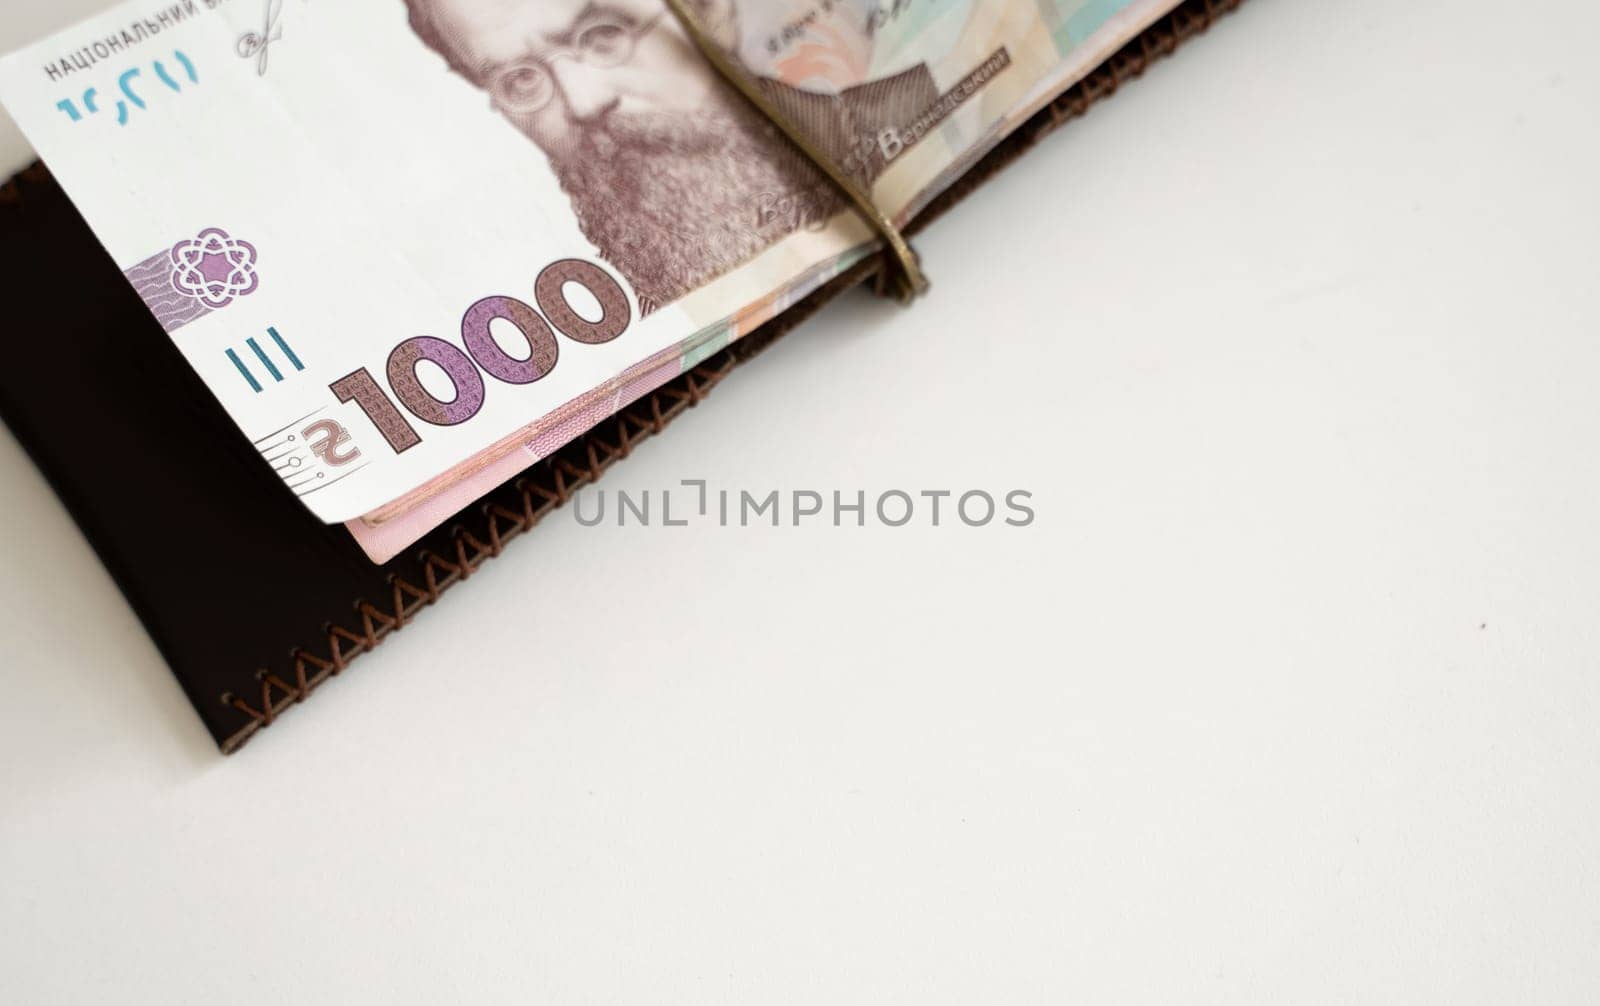 Brown leather money clip, purse with ukrainian hryvnia banknotes. Men's genuine leather wallet. Accessories. Money, financess, economy, saving